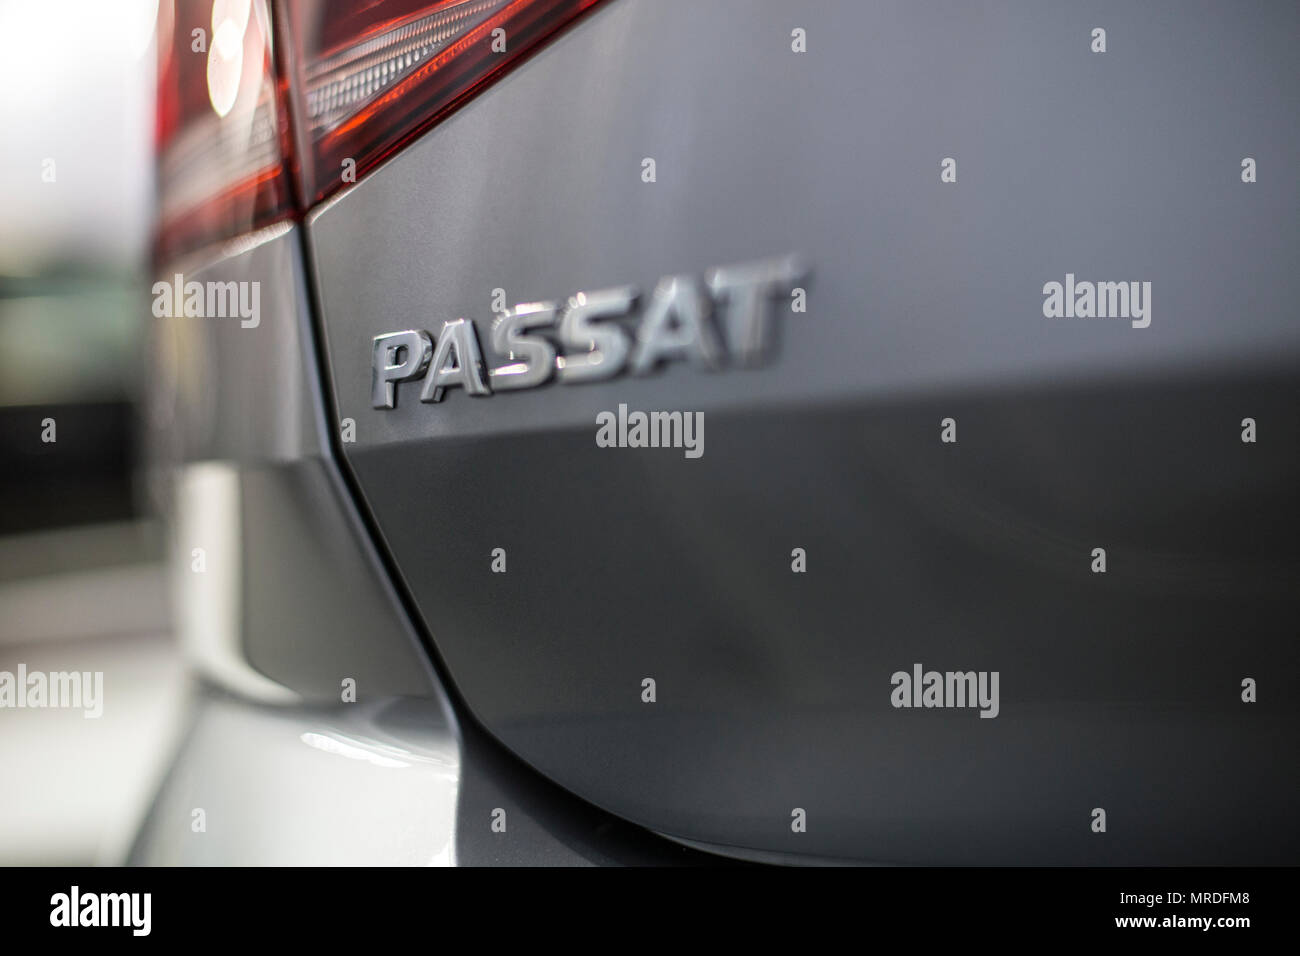 Volkswagen Passat sign on a car Stock Photo